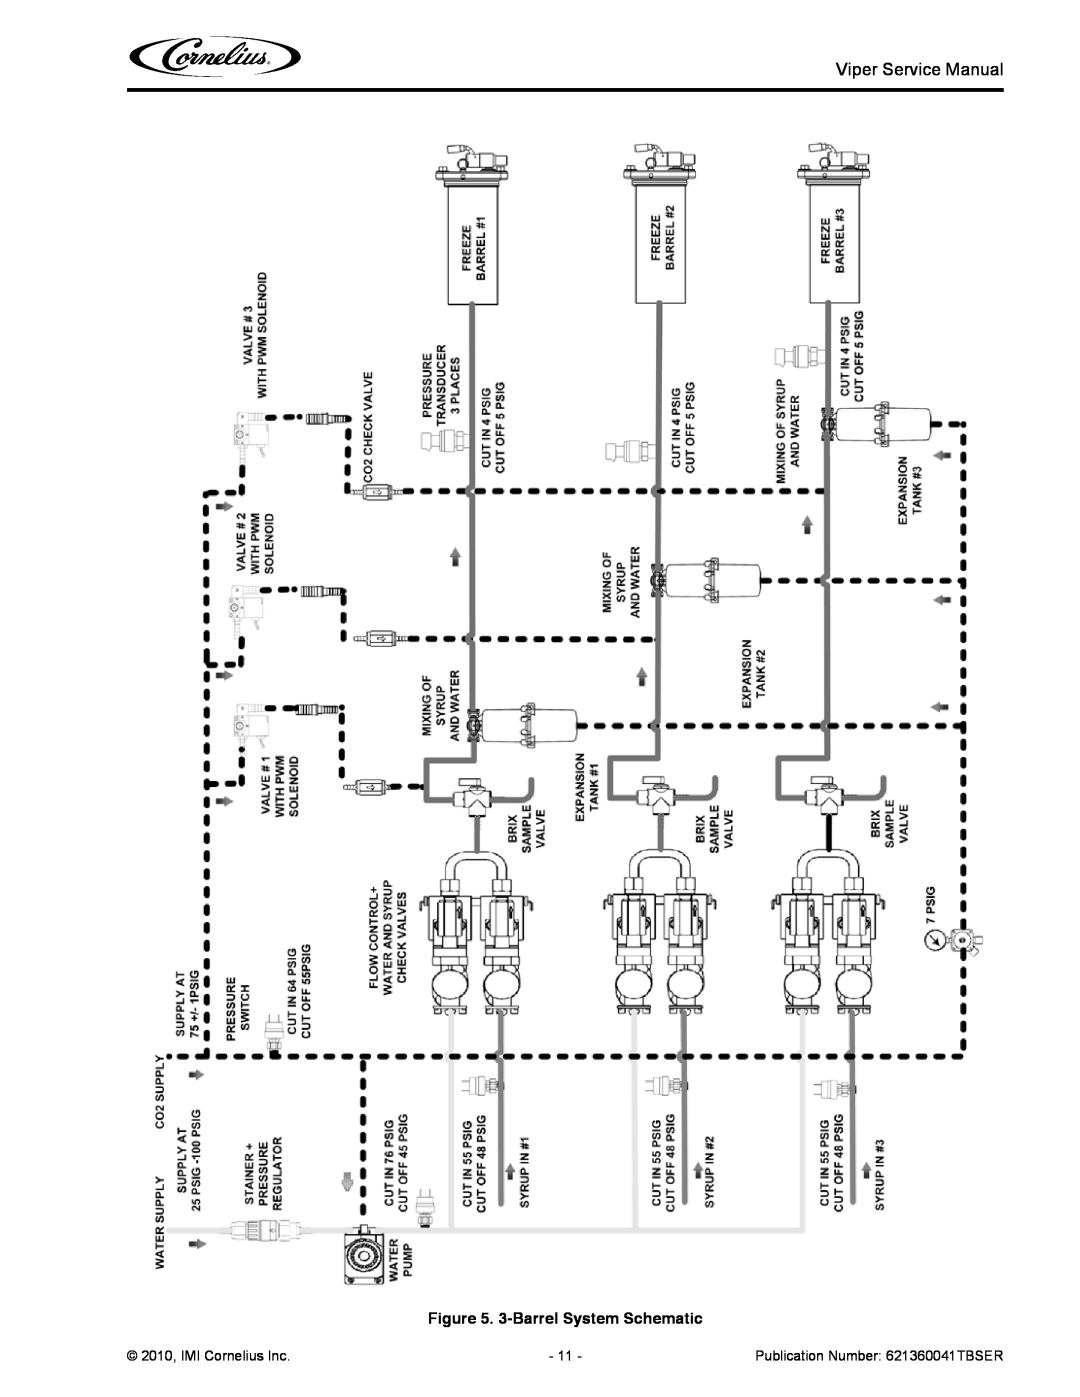 Cornelius service manual 3-BarrelSystem Schematic, 2010, IMI Cornelius Inc, Publication Number 621360041TBSER 